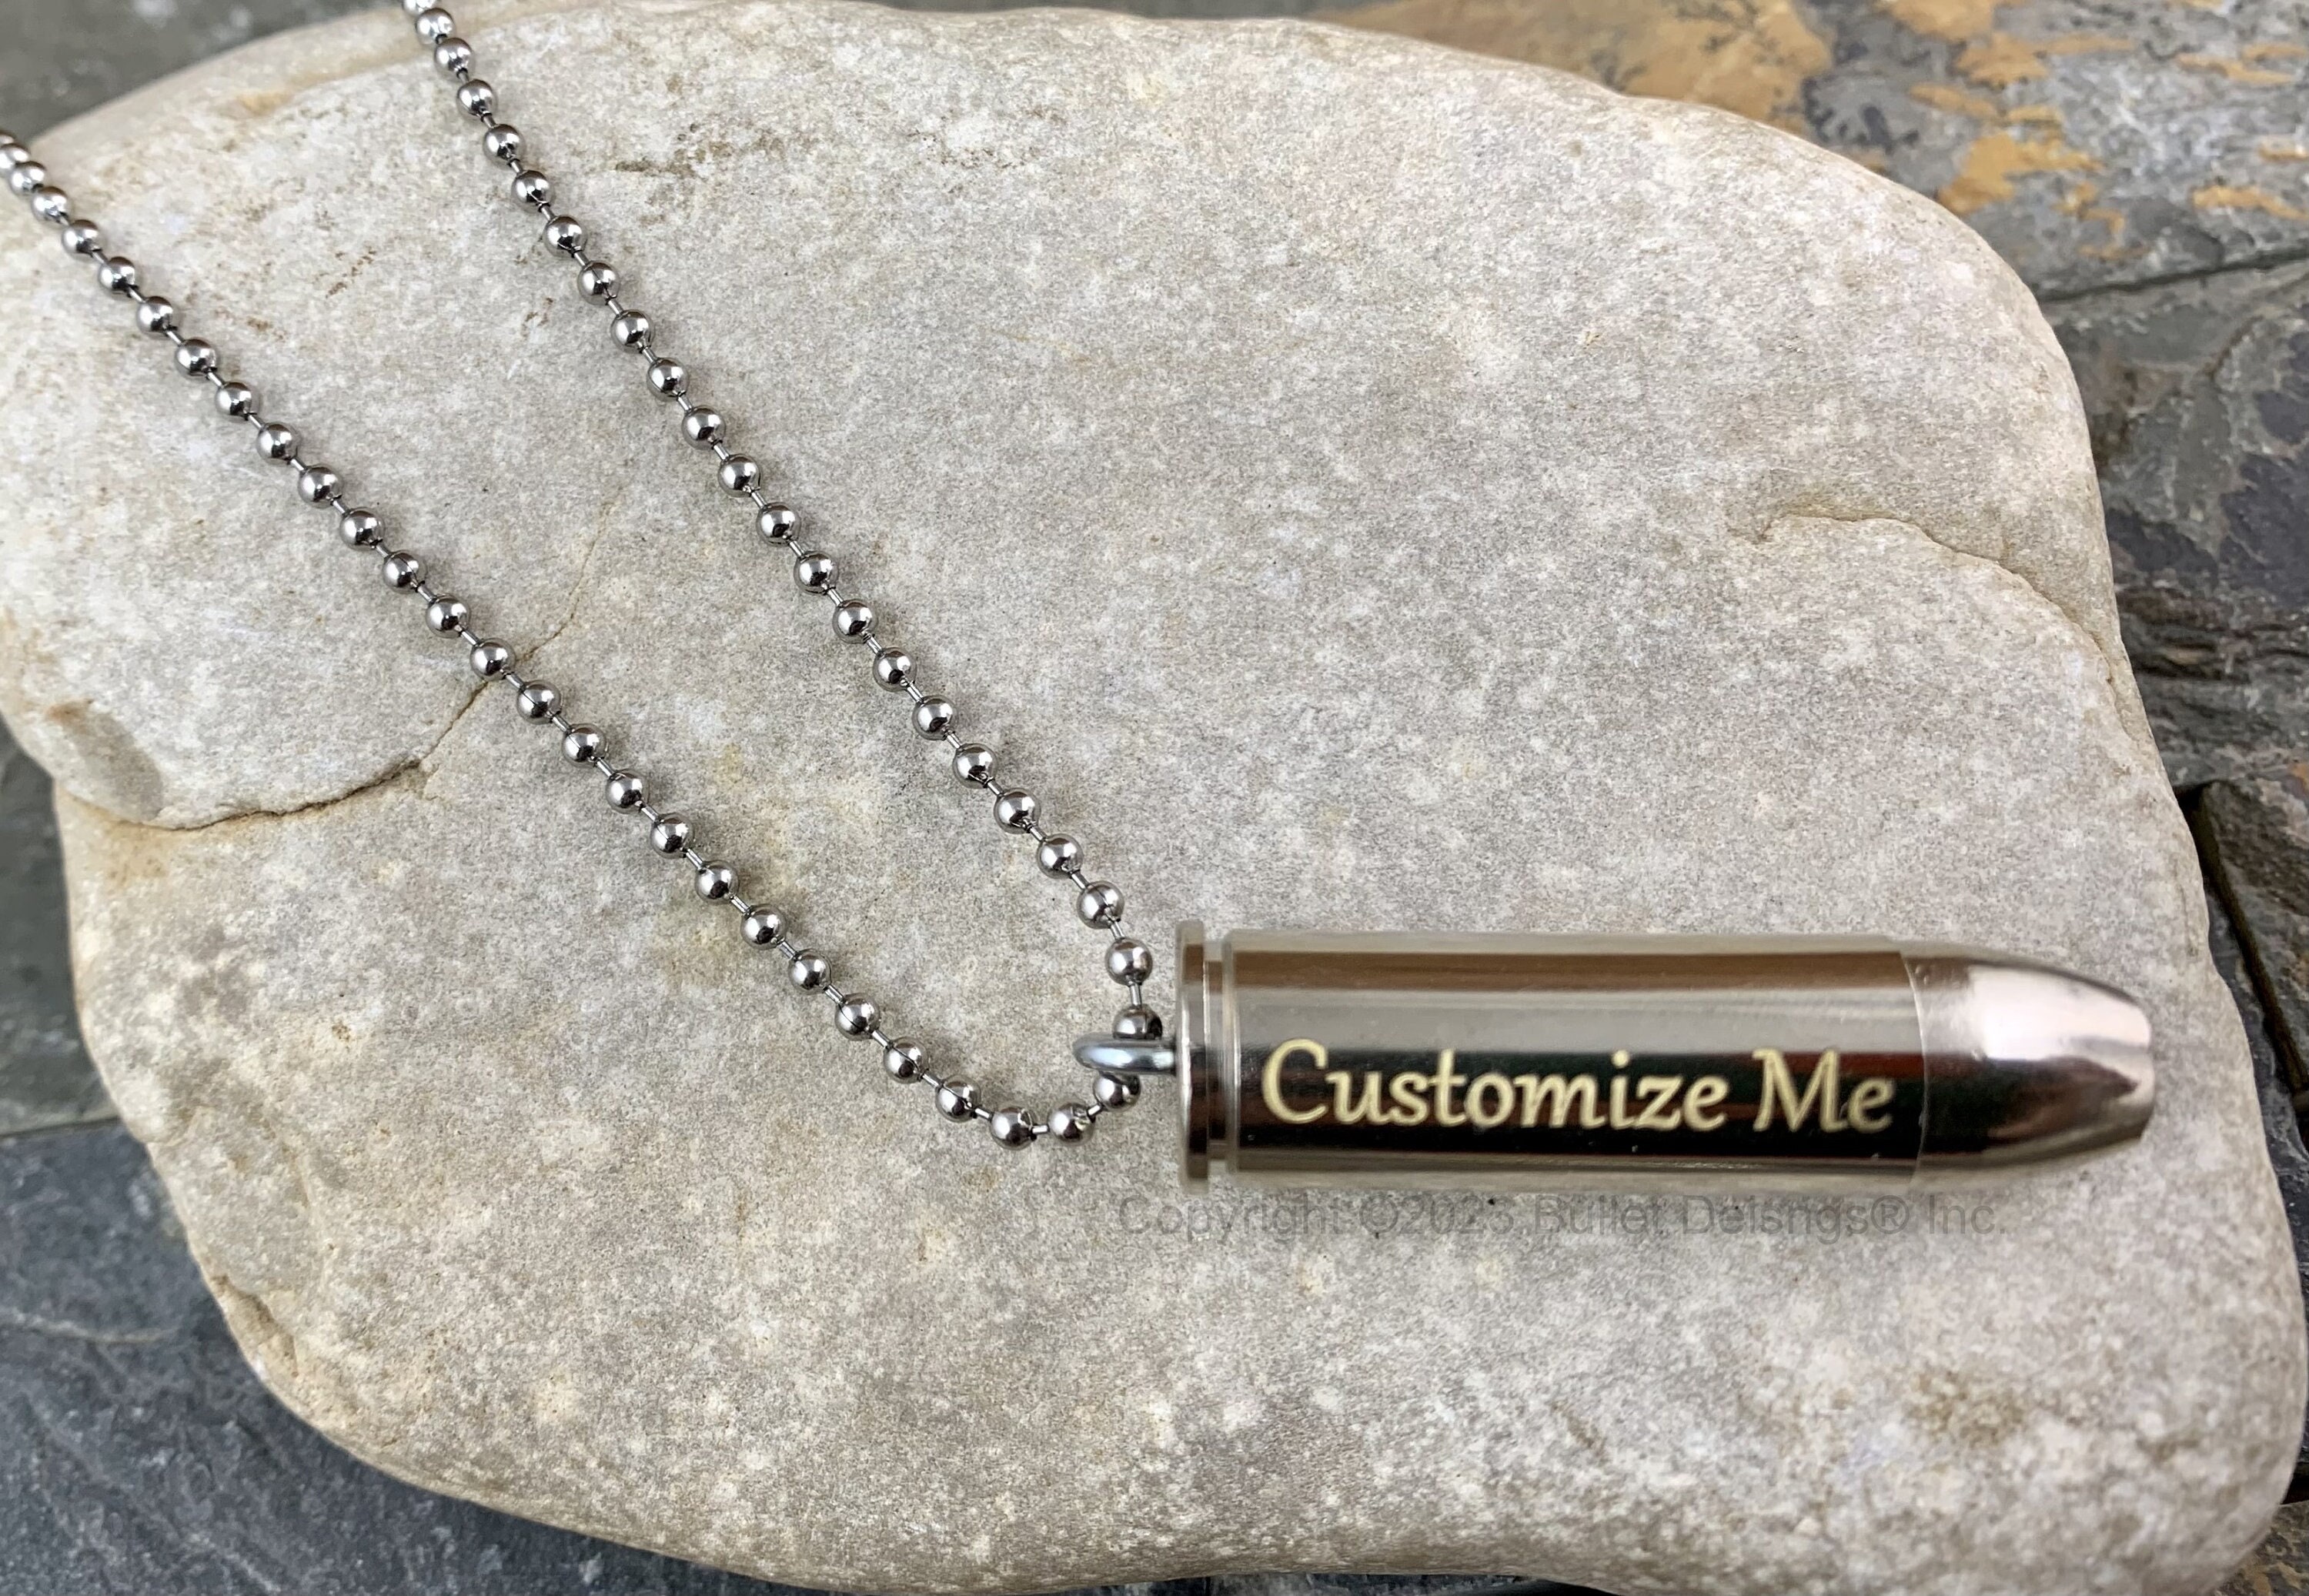 Gold Plated Titanium Steel Bullet Open Pendant Necklace: Custom Engraved  Gift For Men From Guozhuwu, $2.49 | DHgate.Com